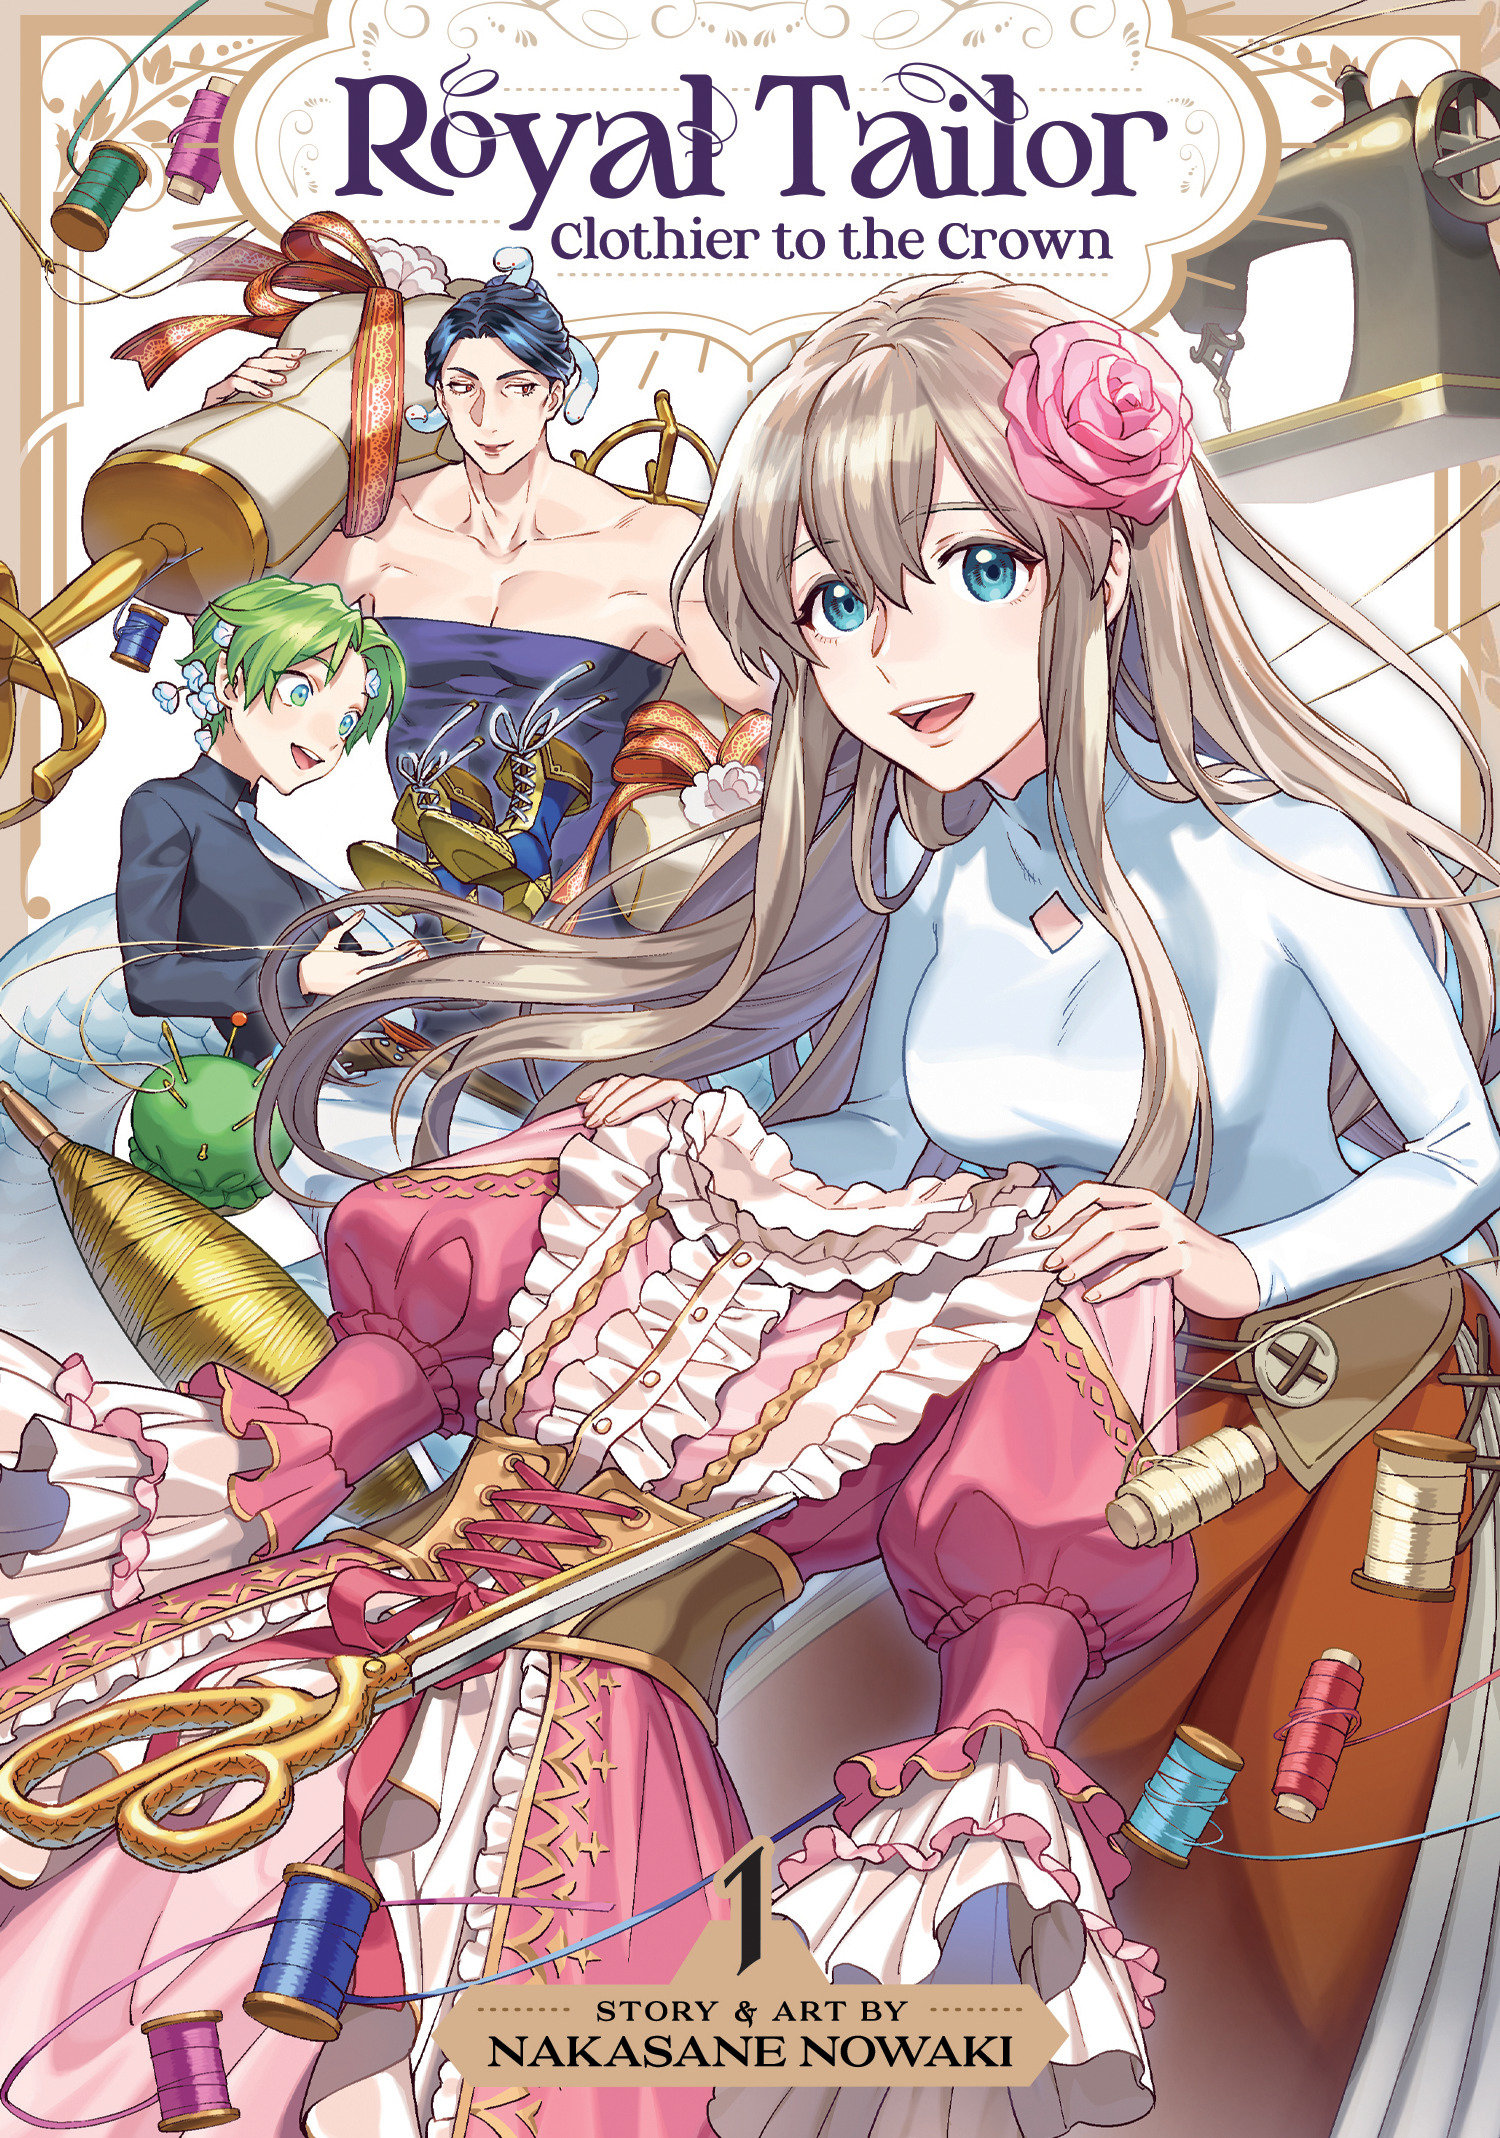 Royal Tailor: Clothier to the Crown Manga Volume 1